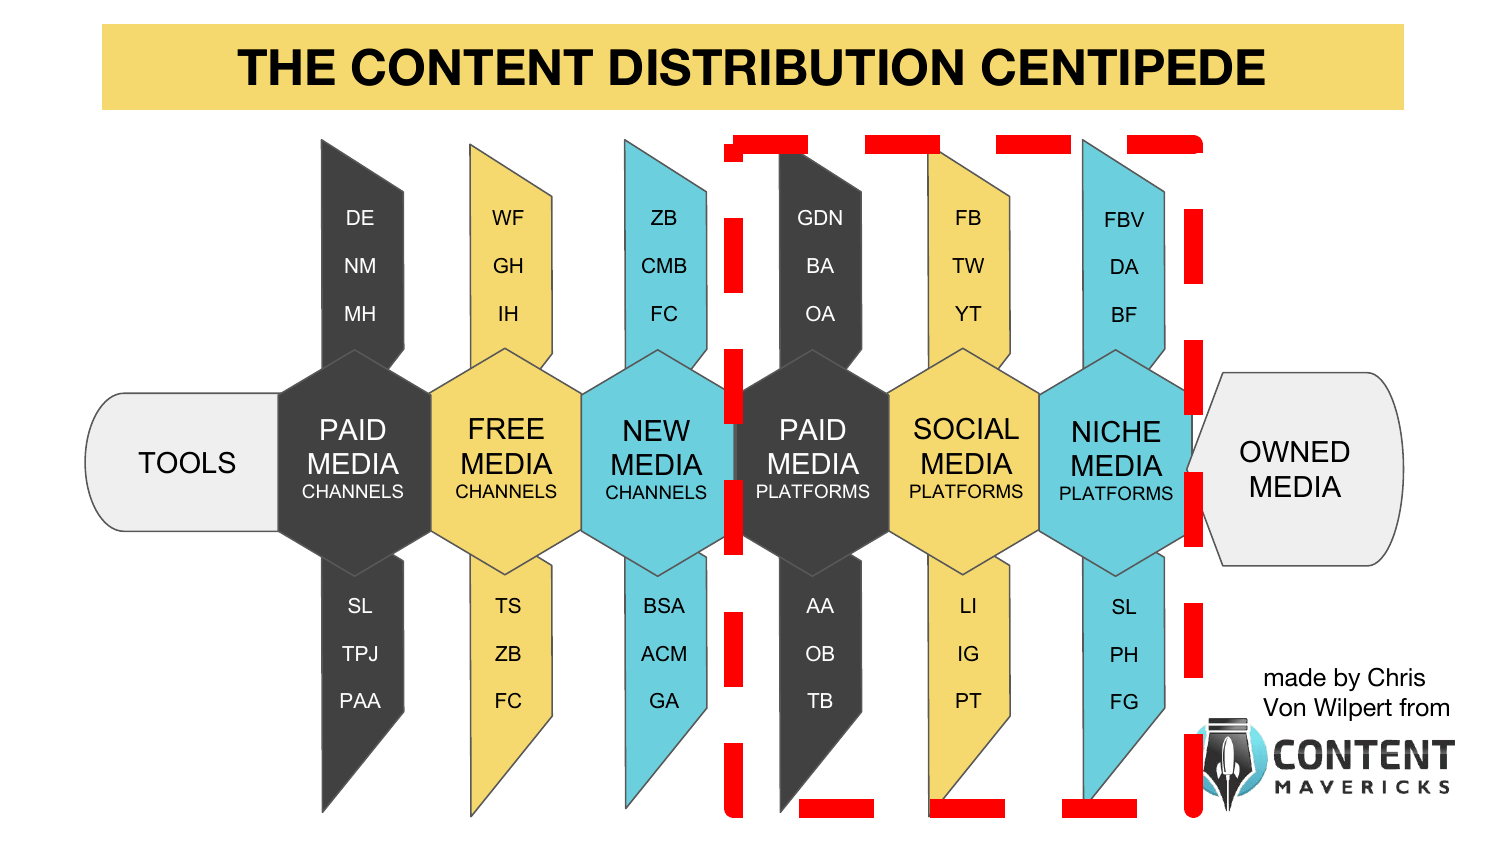 content distribution centipede platforms image